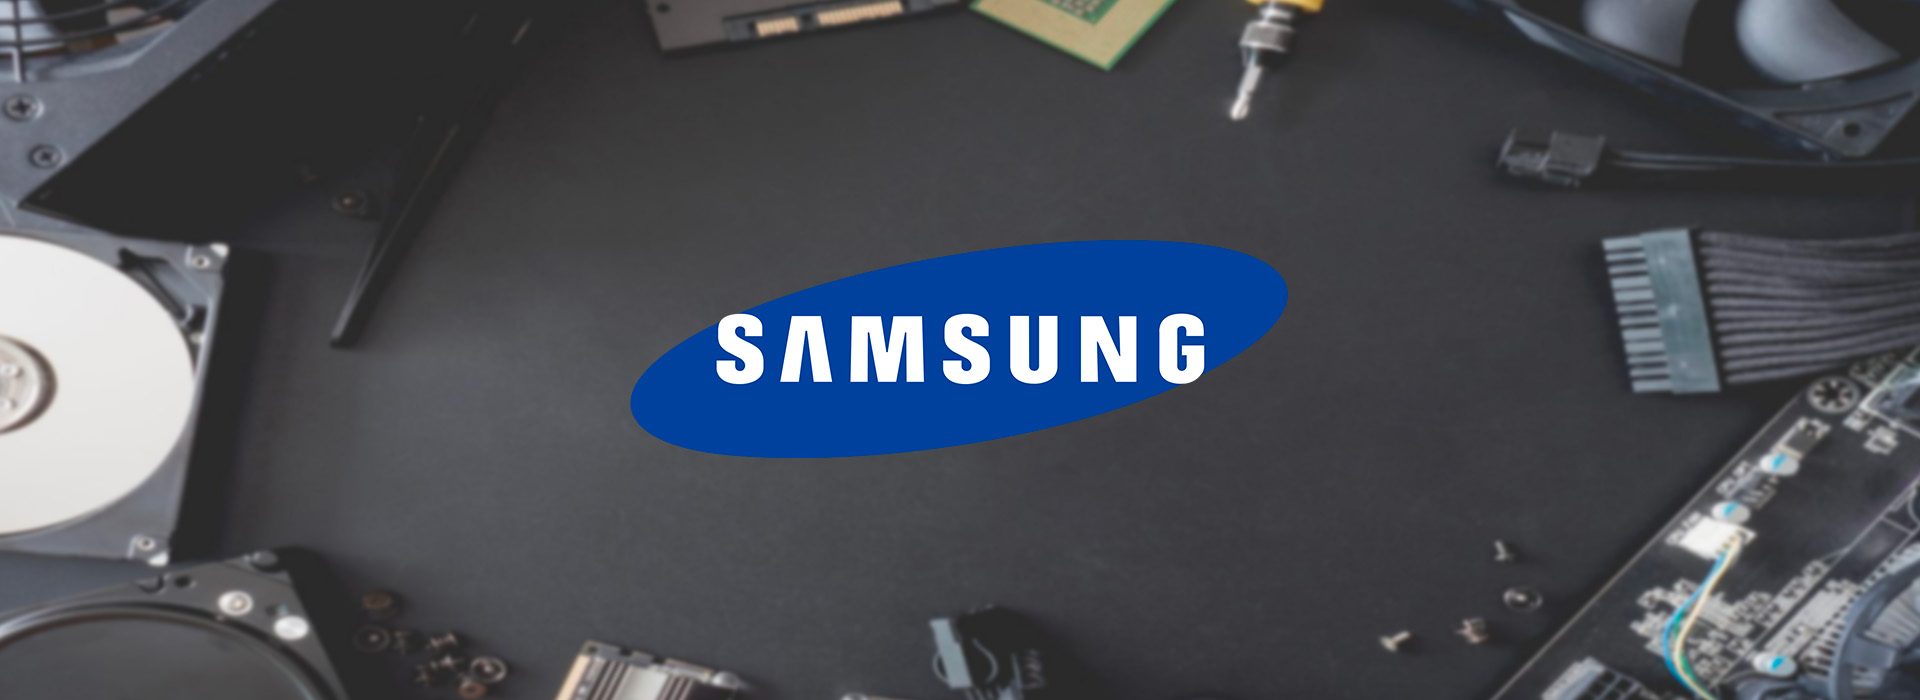 Samsung header 2